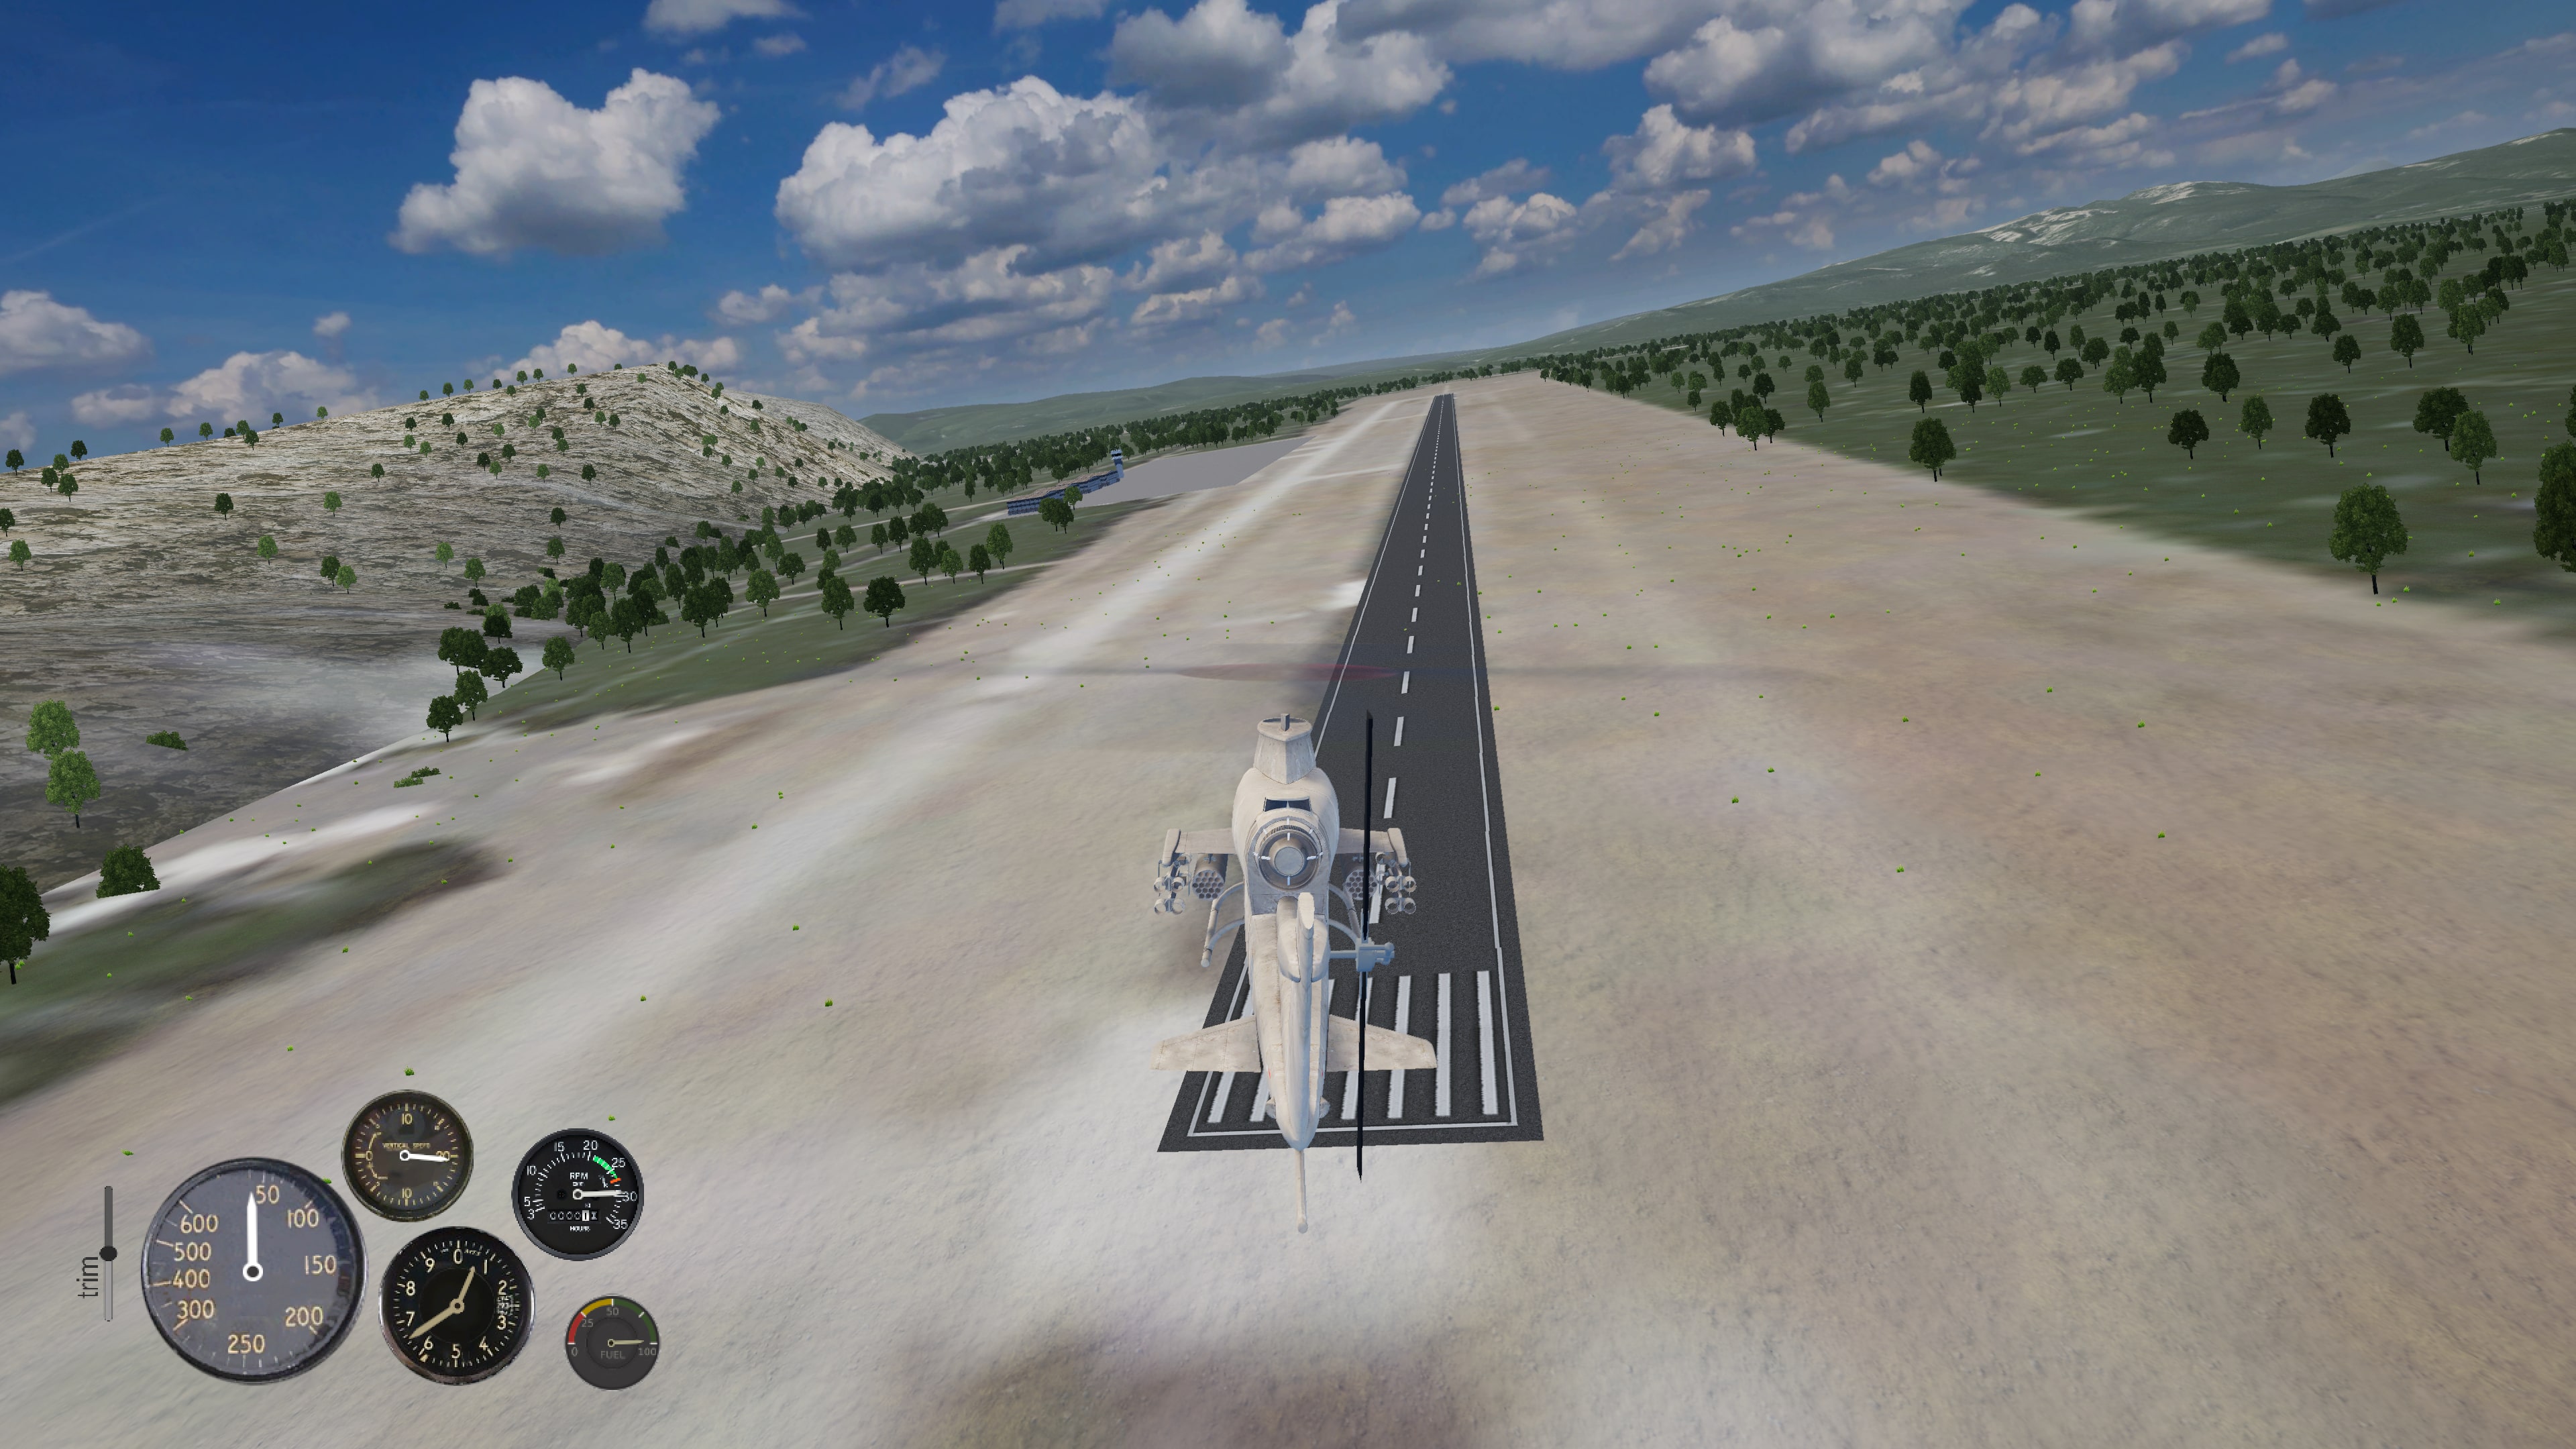 Universal Flight Simulator on PS4 — price history, screenshots